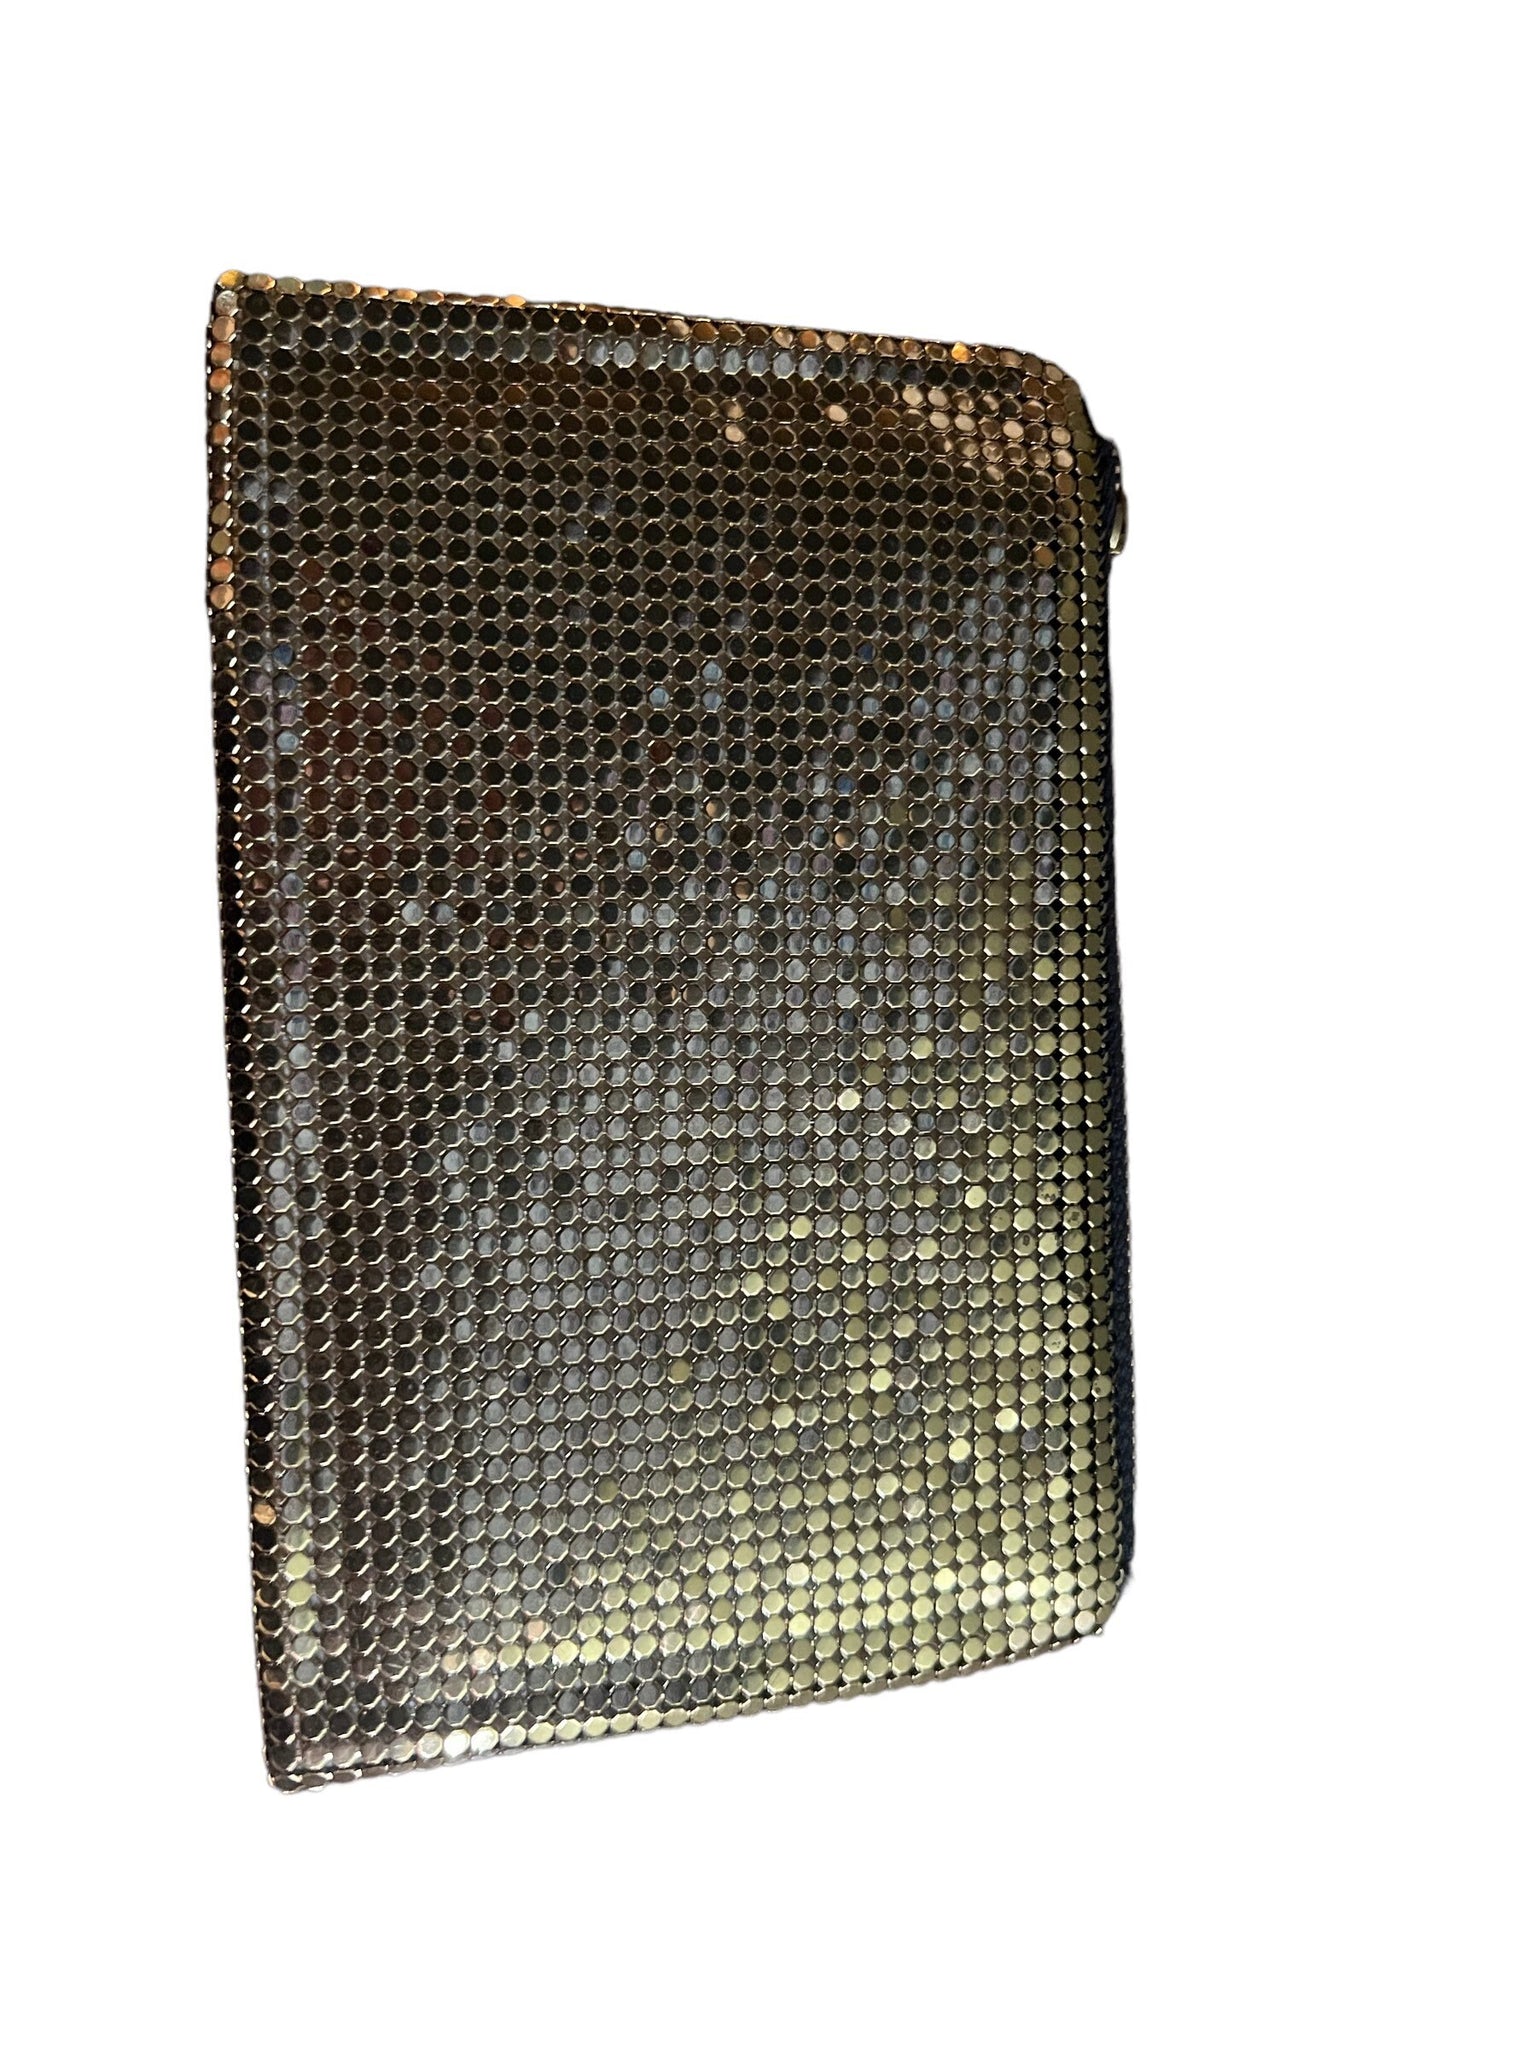 Vintage gold mesh Whiting & Davis coin purse